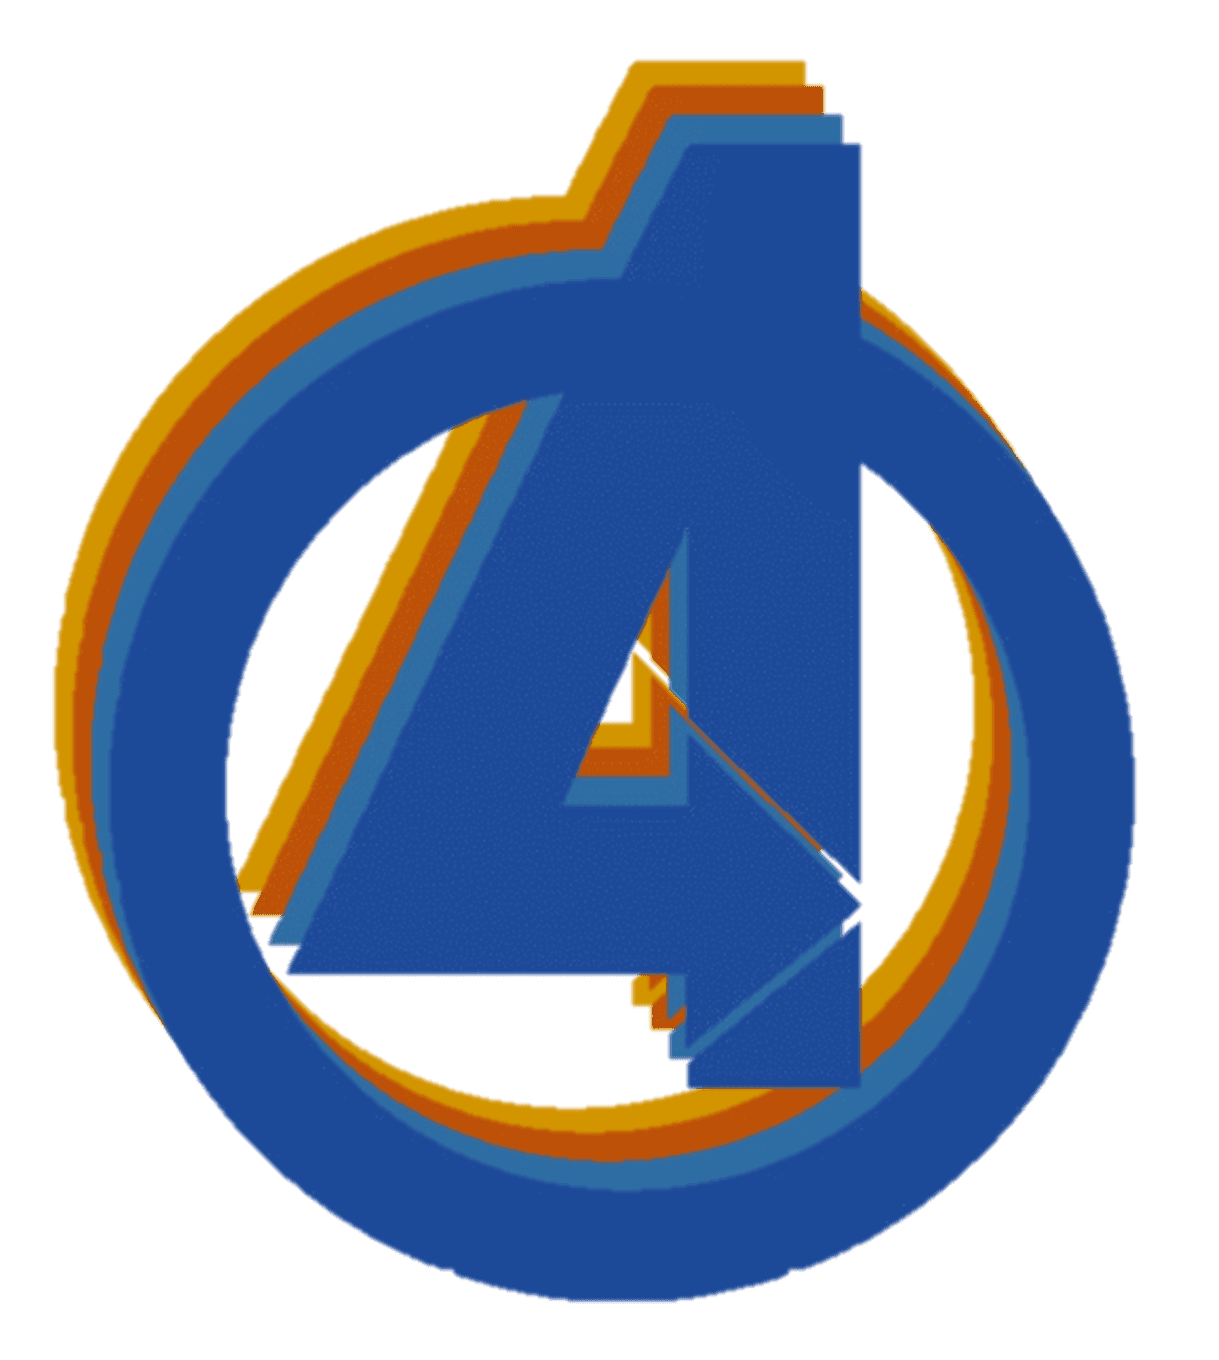 Fantastic-Four-logo-cầu vồng lấy cảm hứng từ Avengers